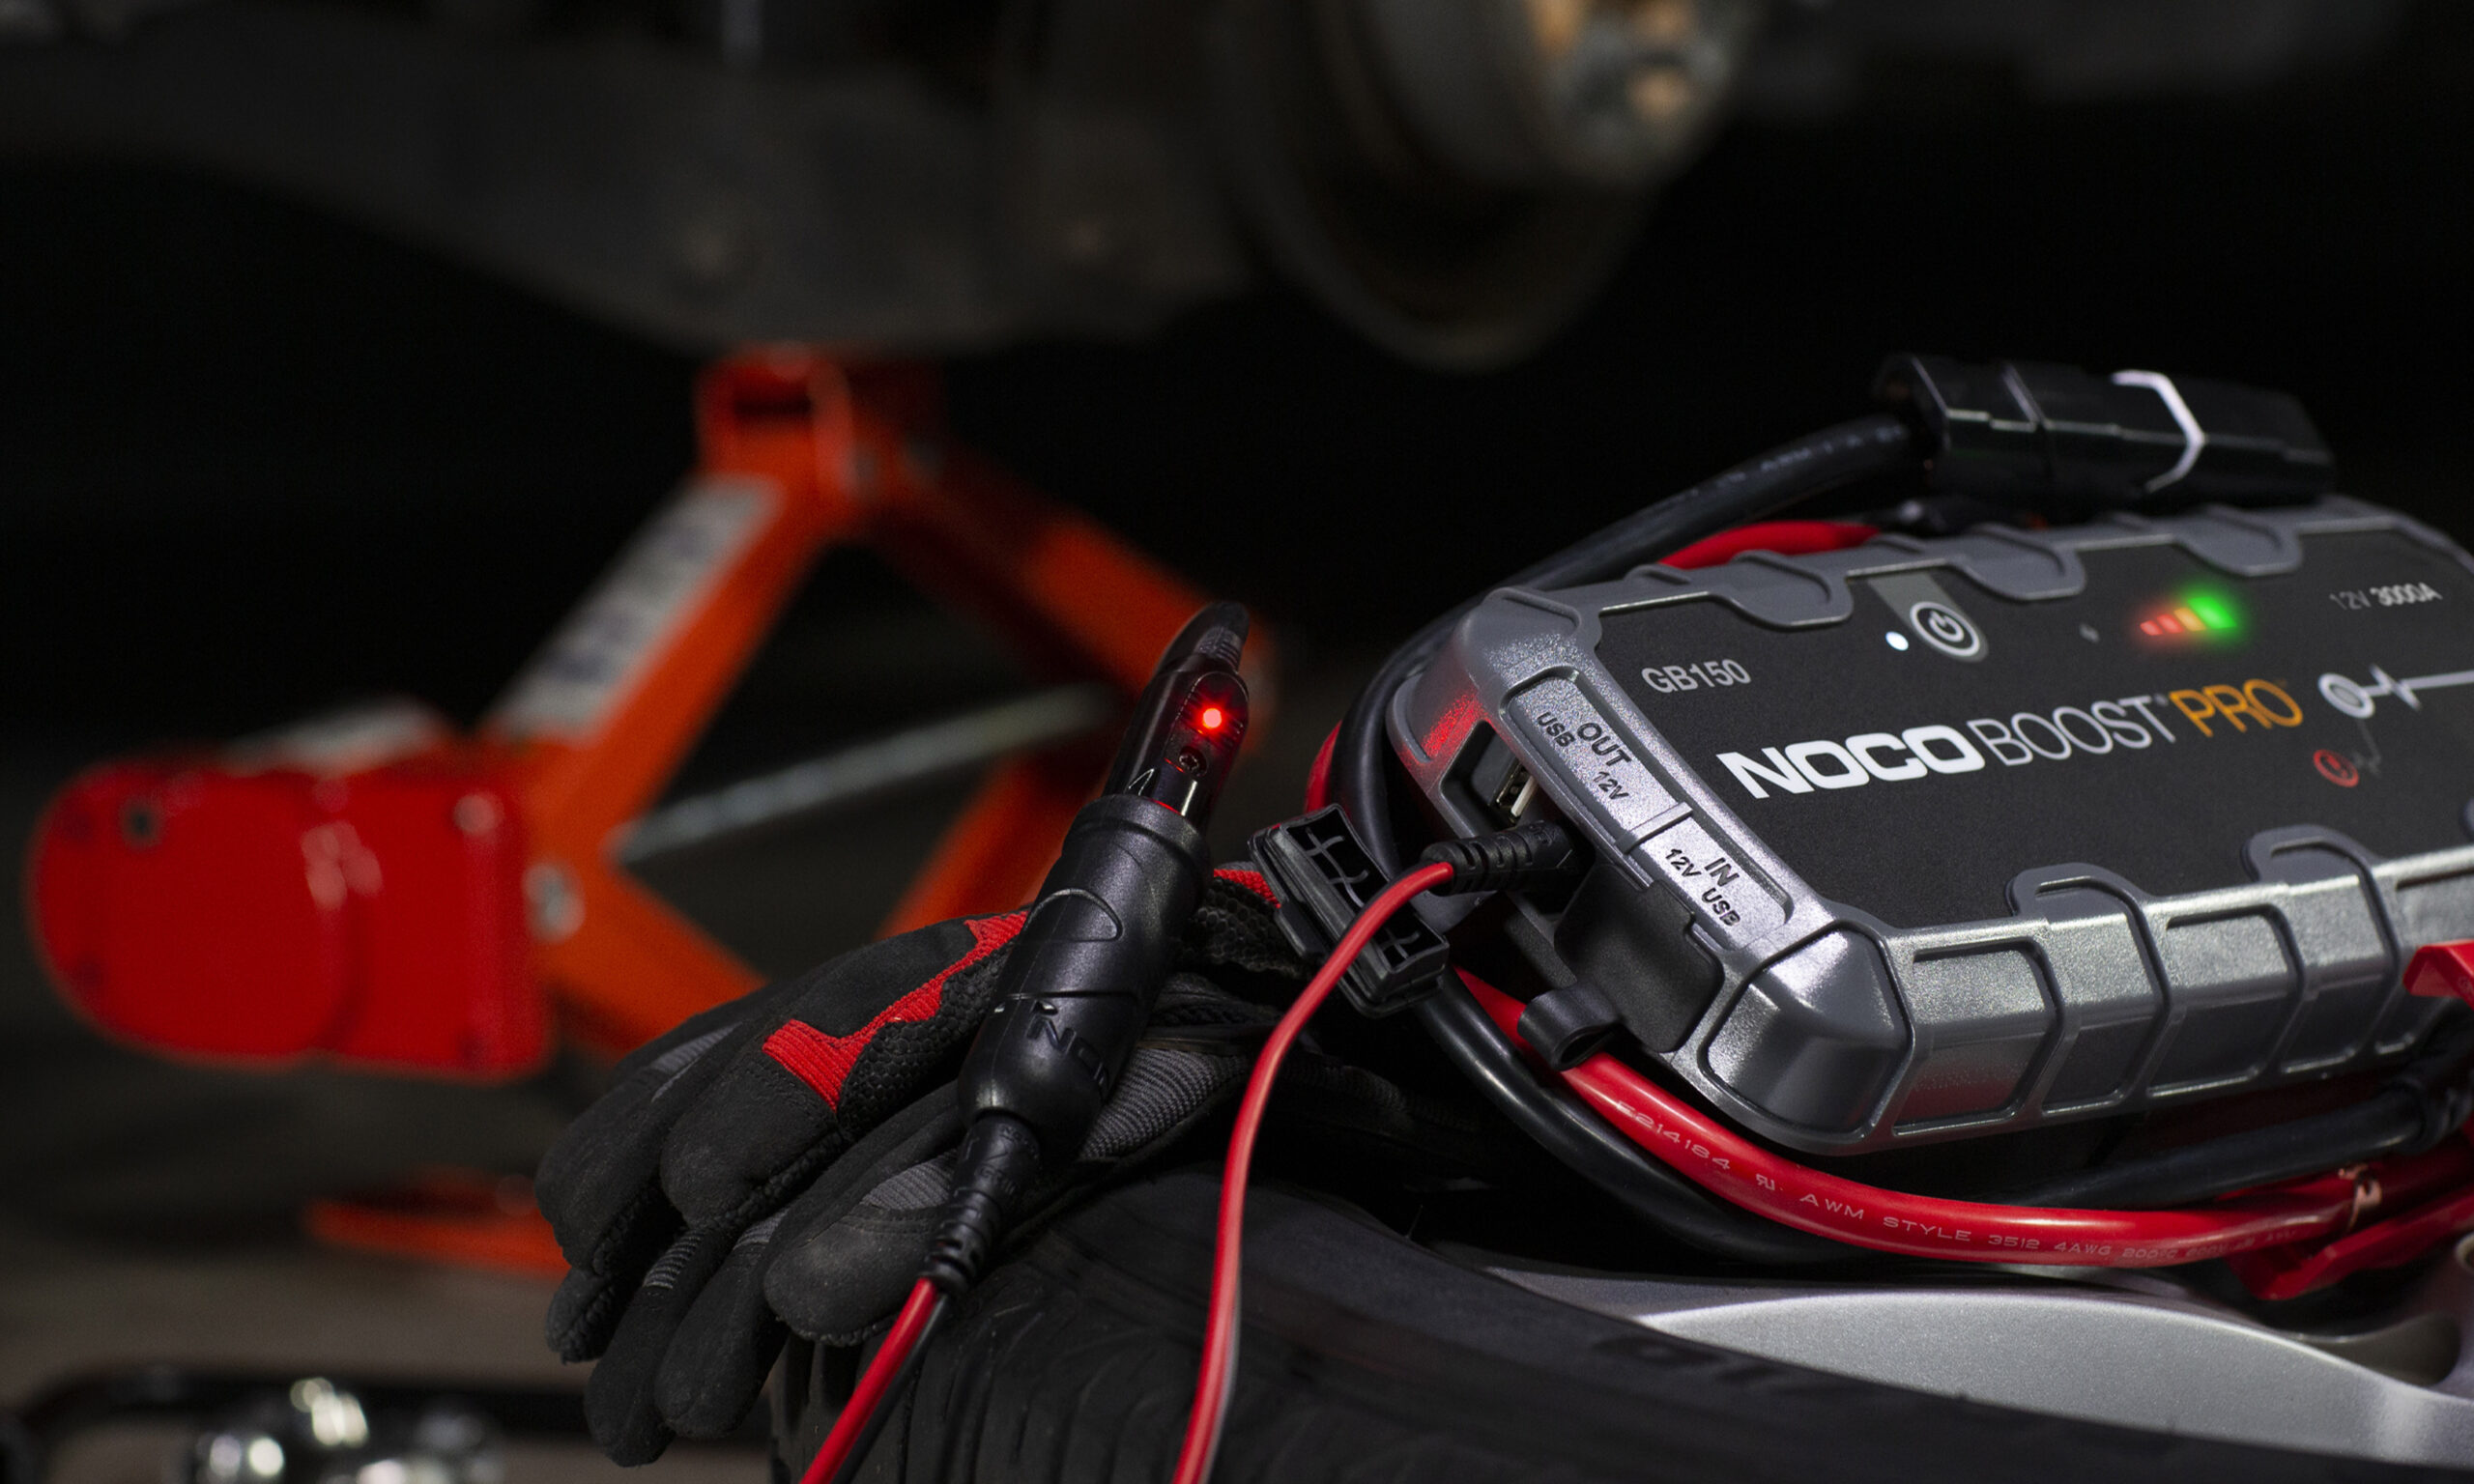 NOCO Boost Pro GB150 3000A UltraSafe Car Battery Jump Starter, 12V